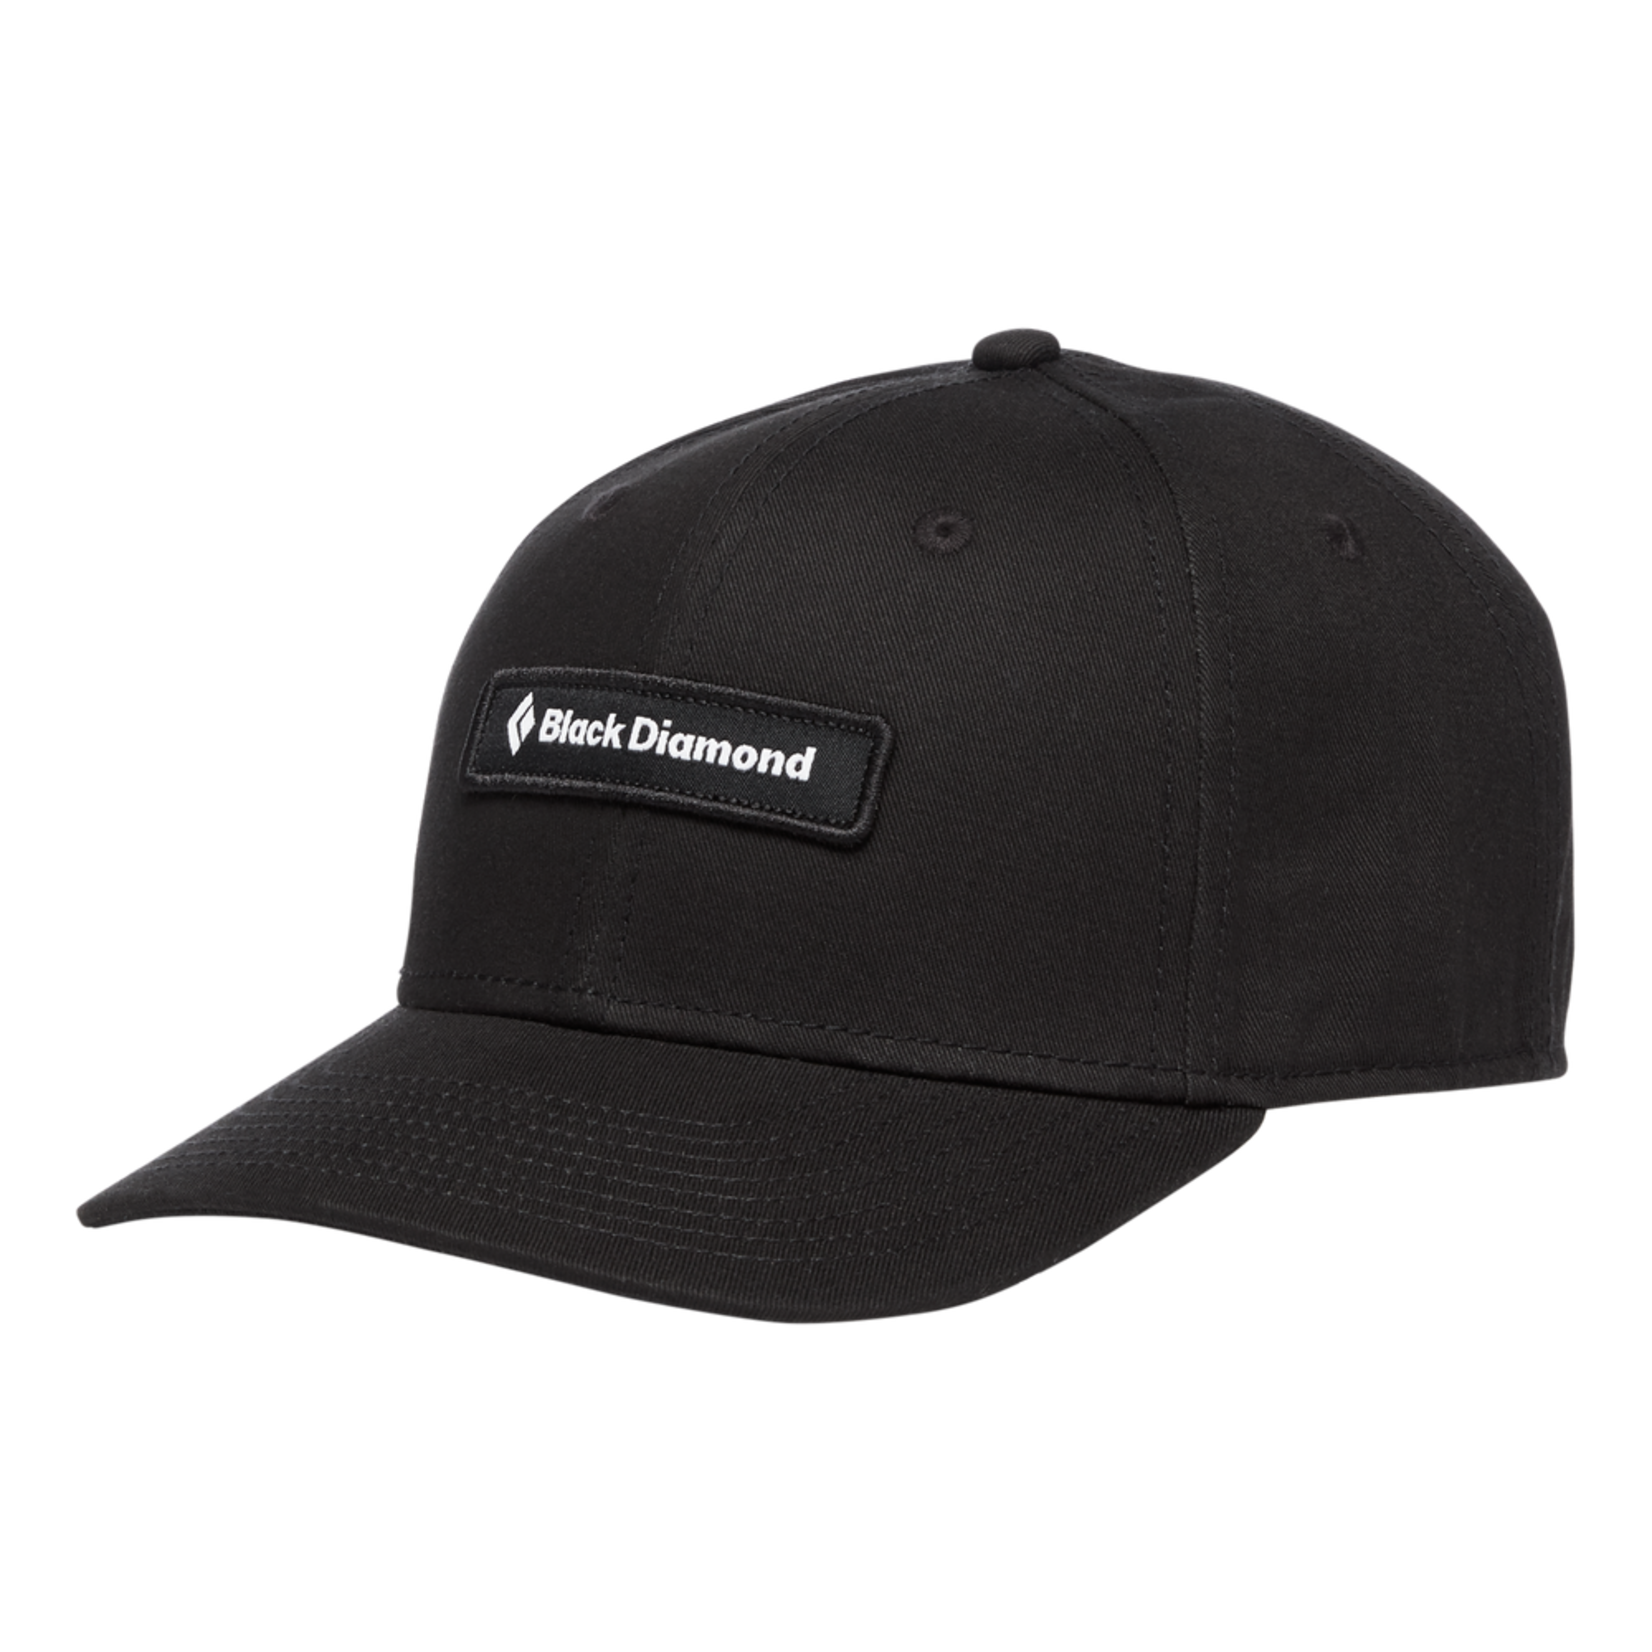 Black Diamond Black Label Hat (casquette)